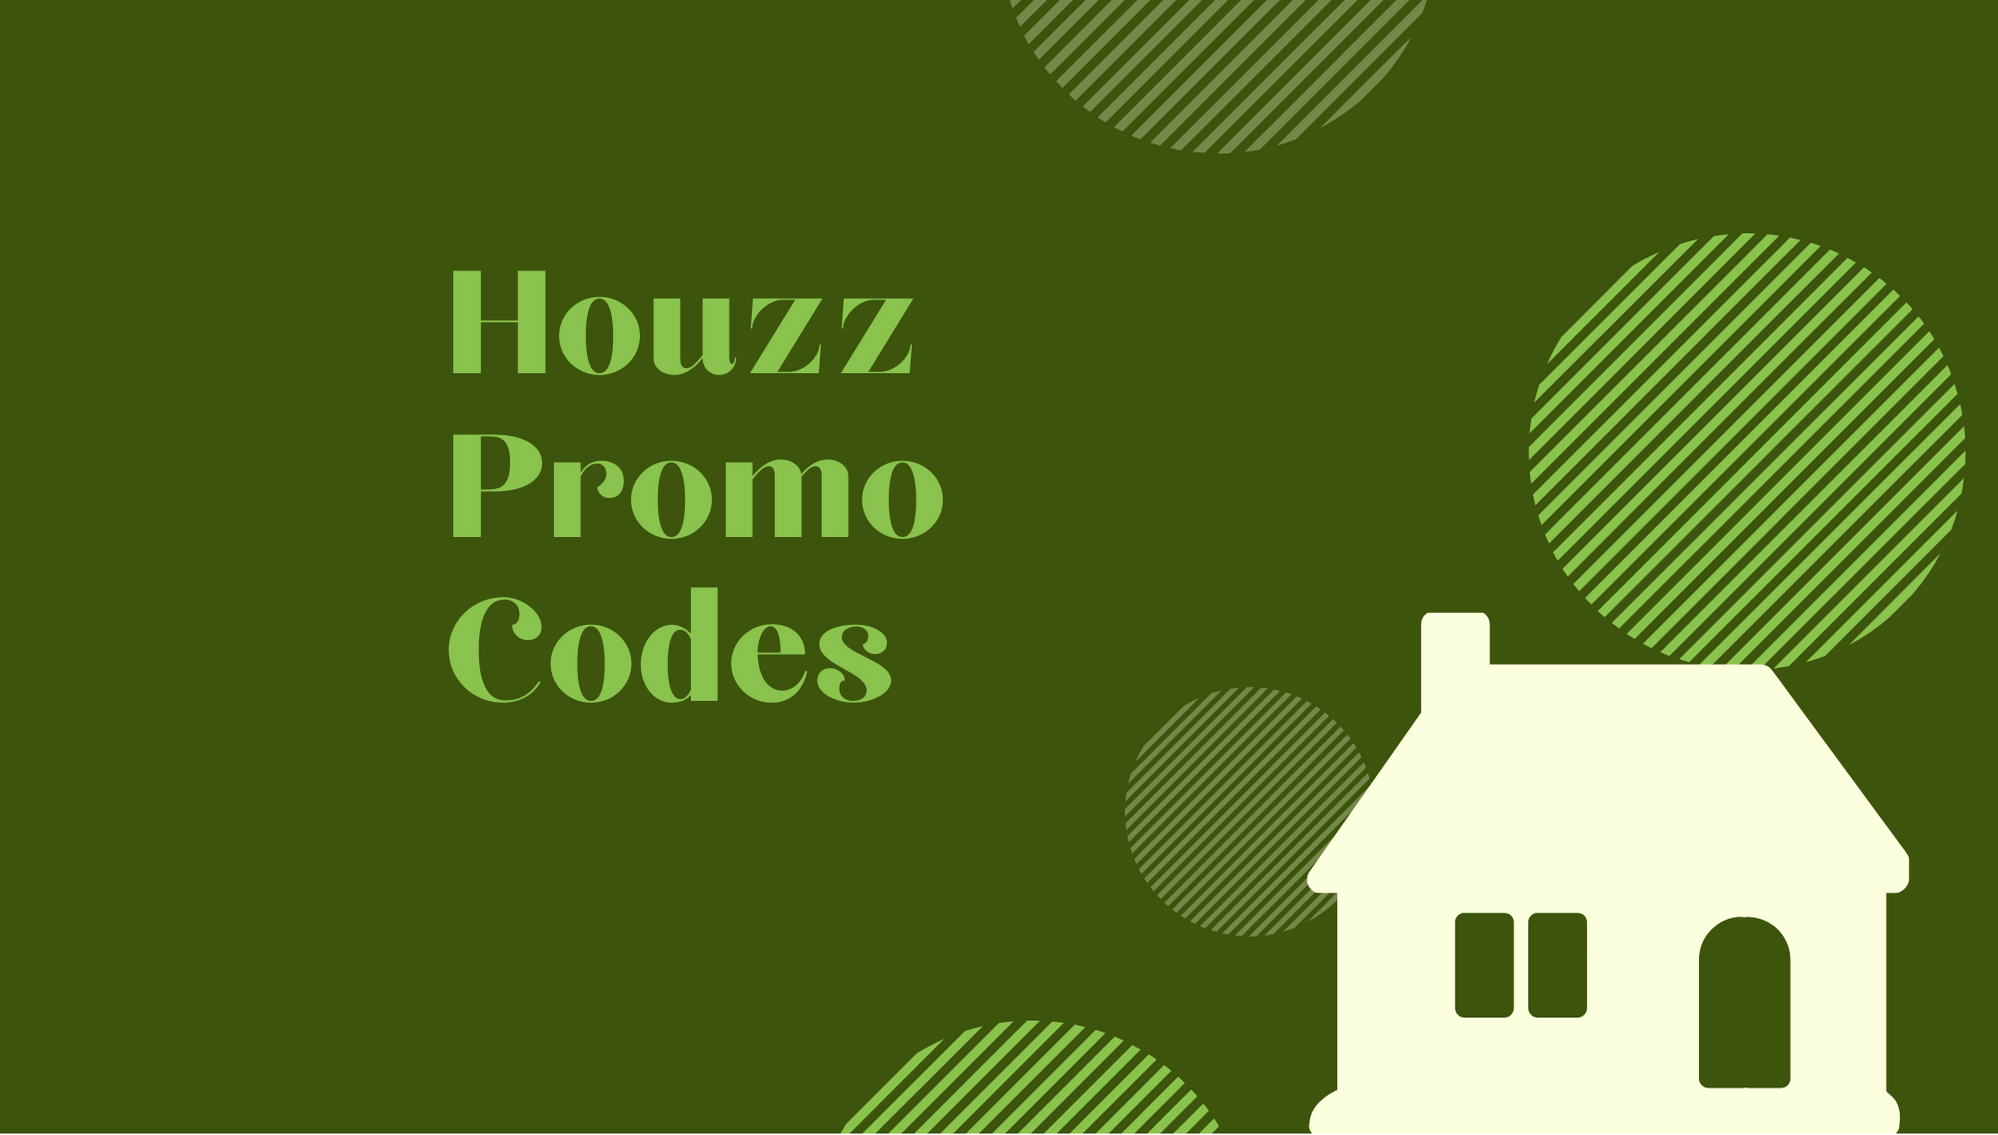 houzz promo code for 2017